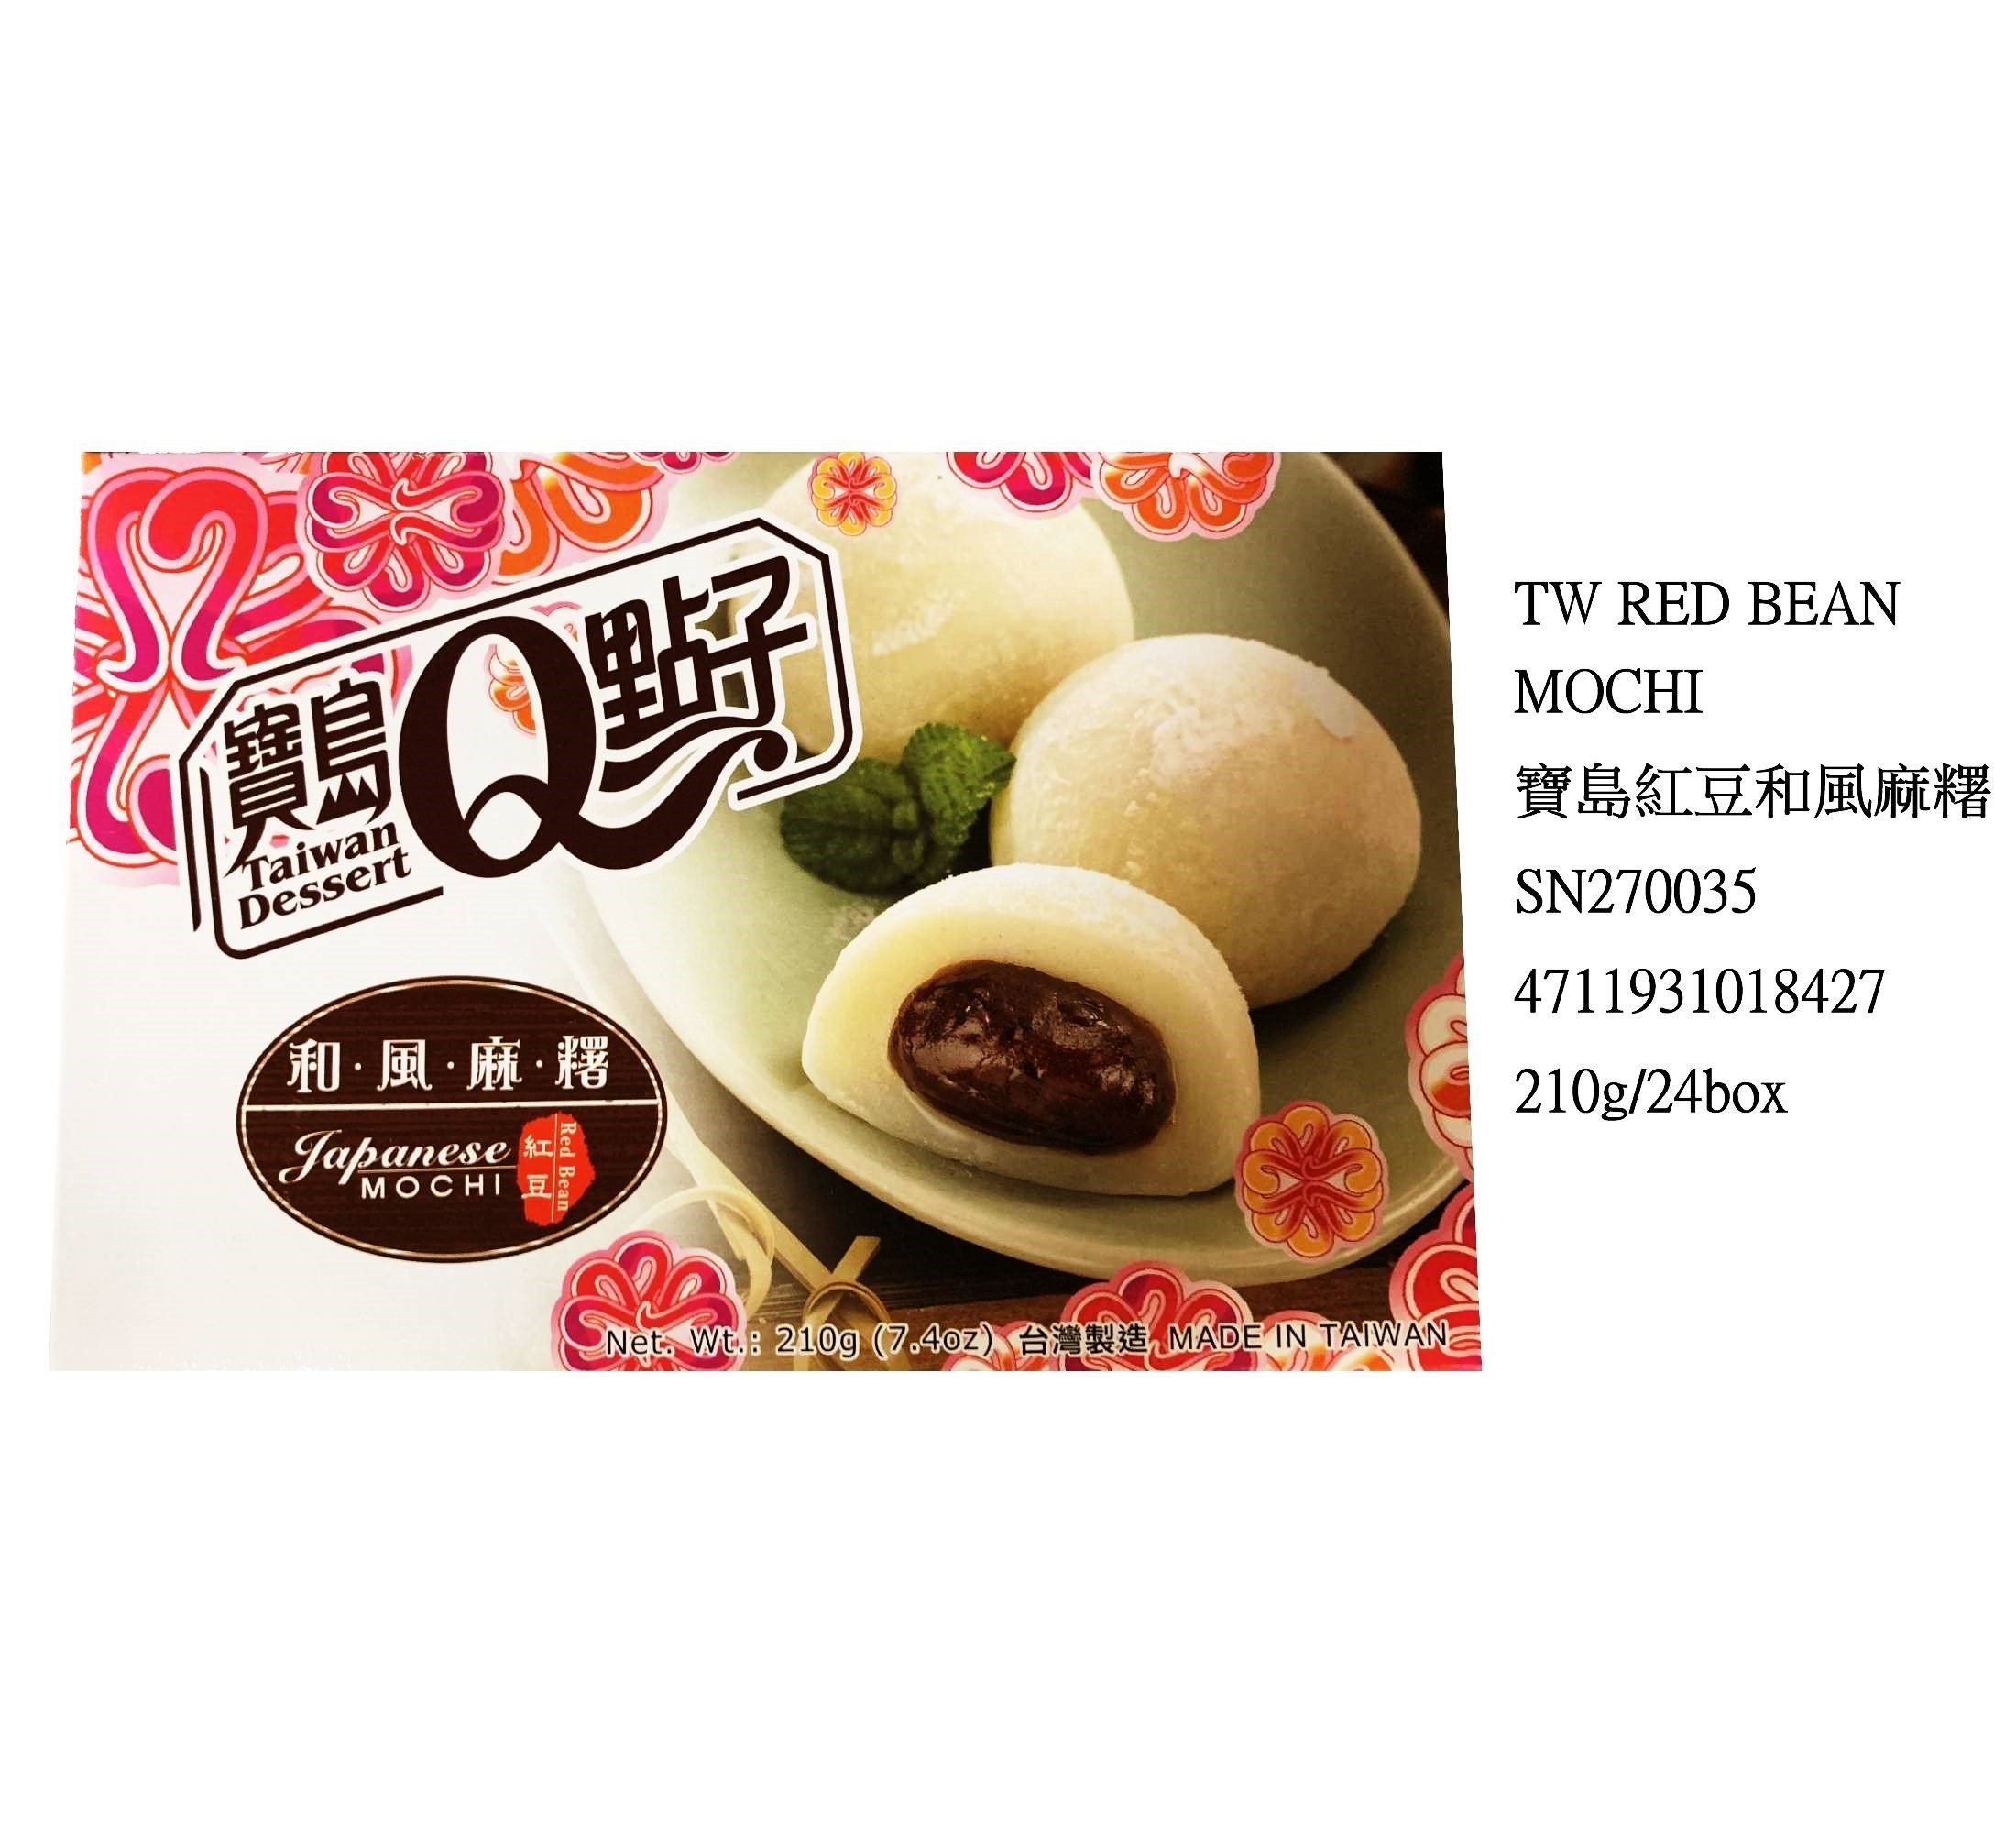 TAIWAN DESSERT RED BEAN MOCHI SN270035